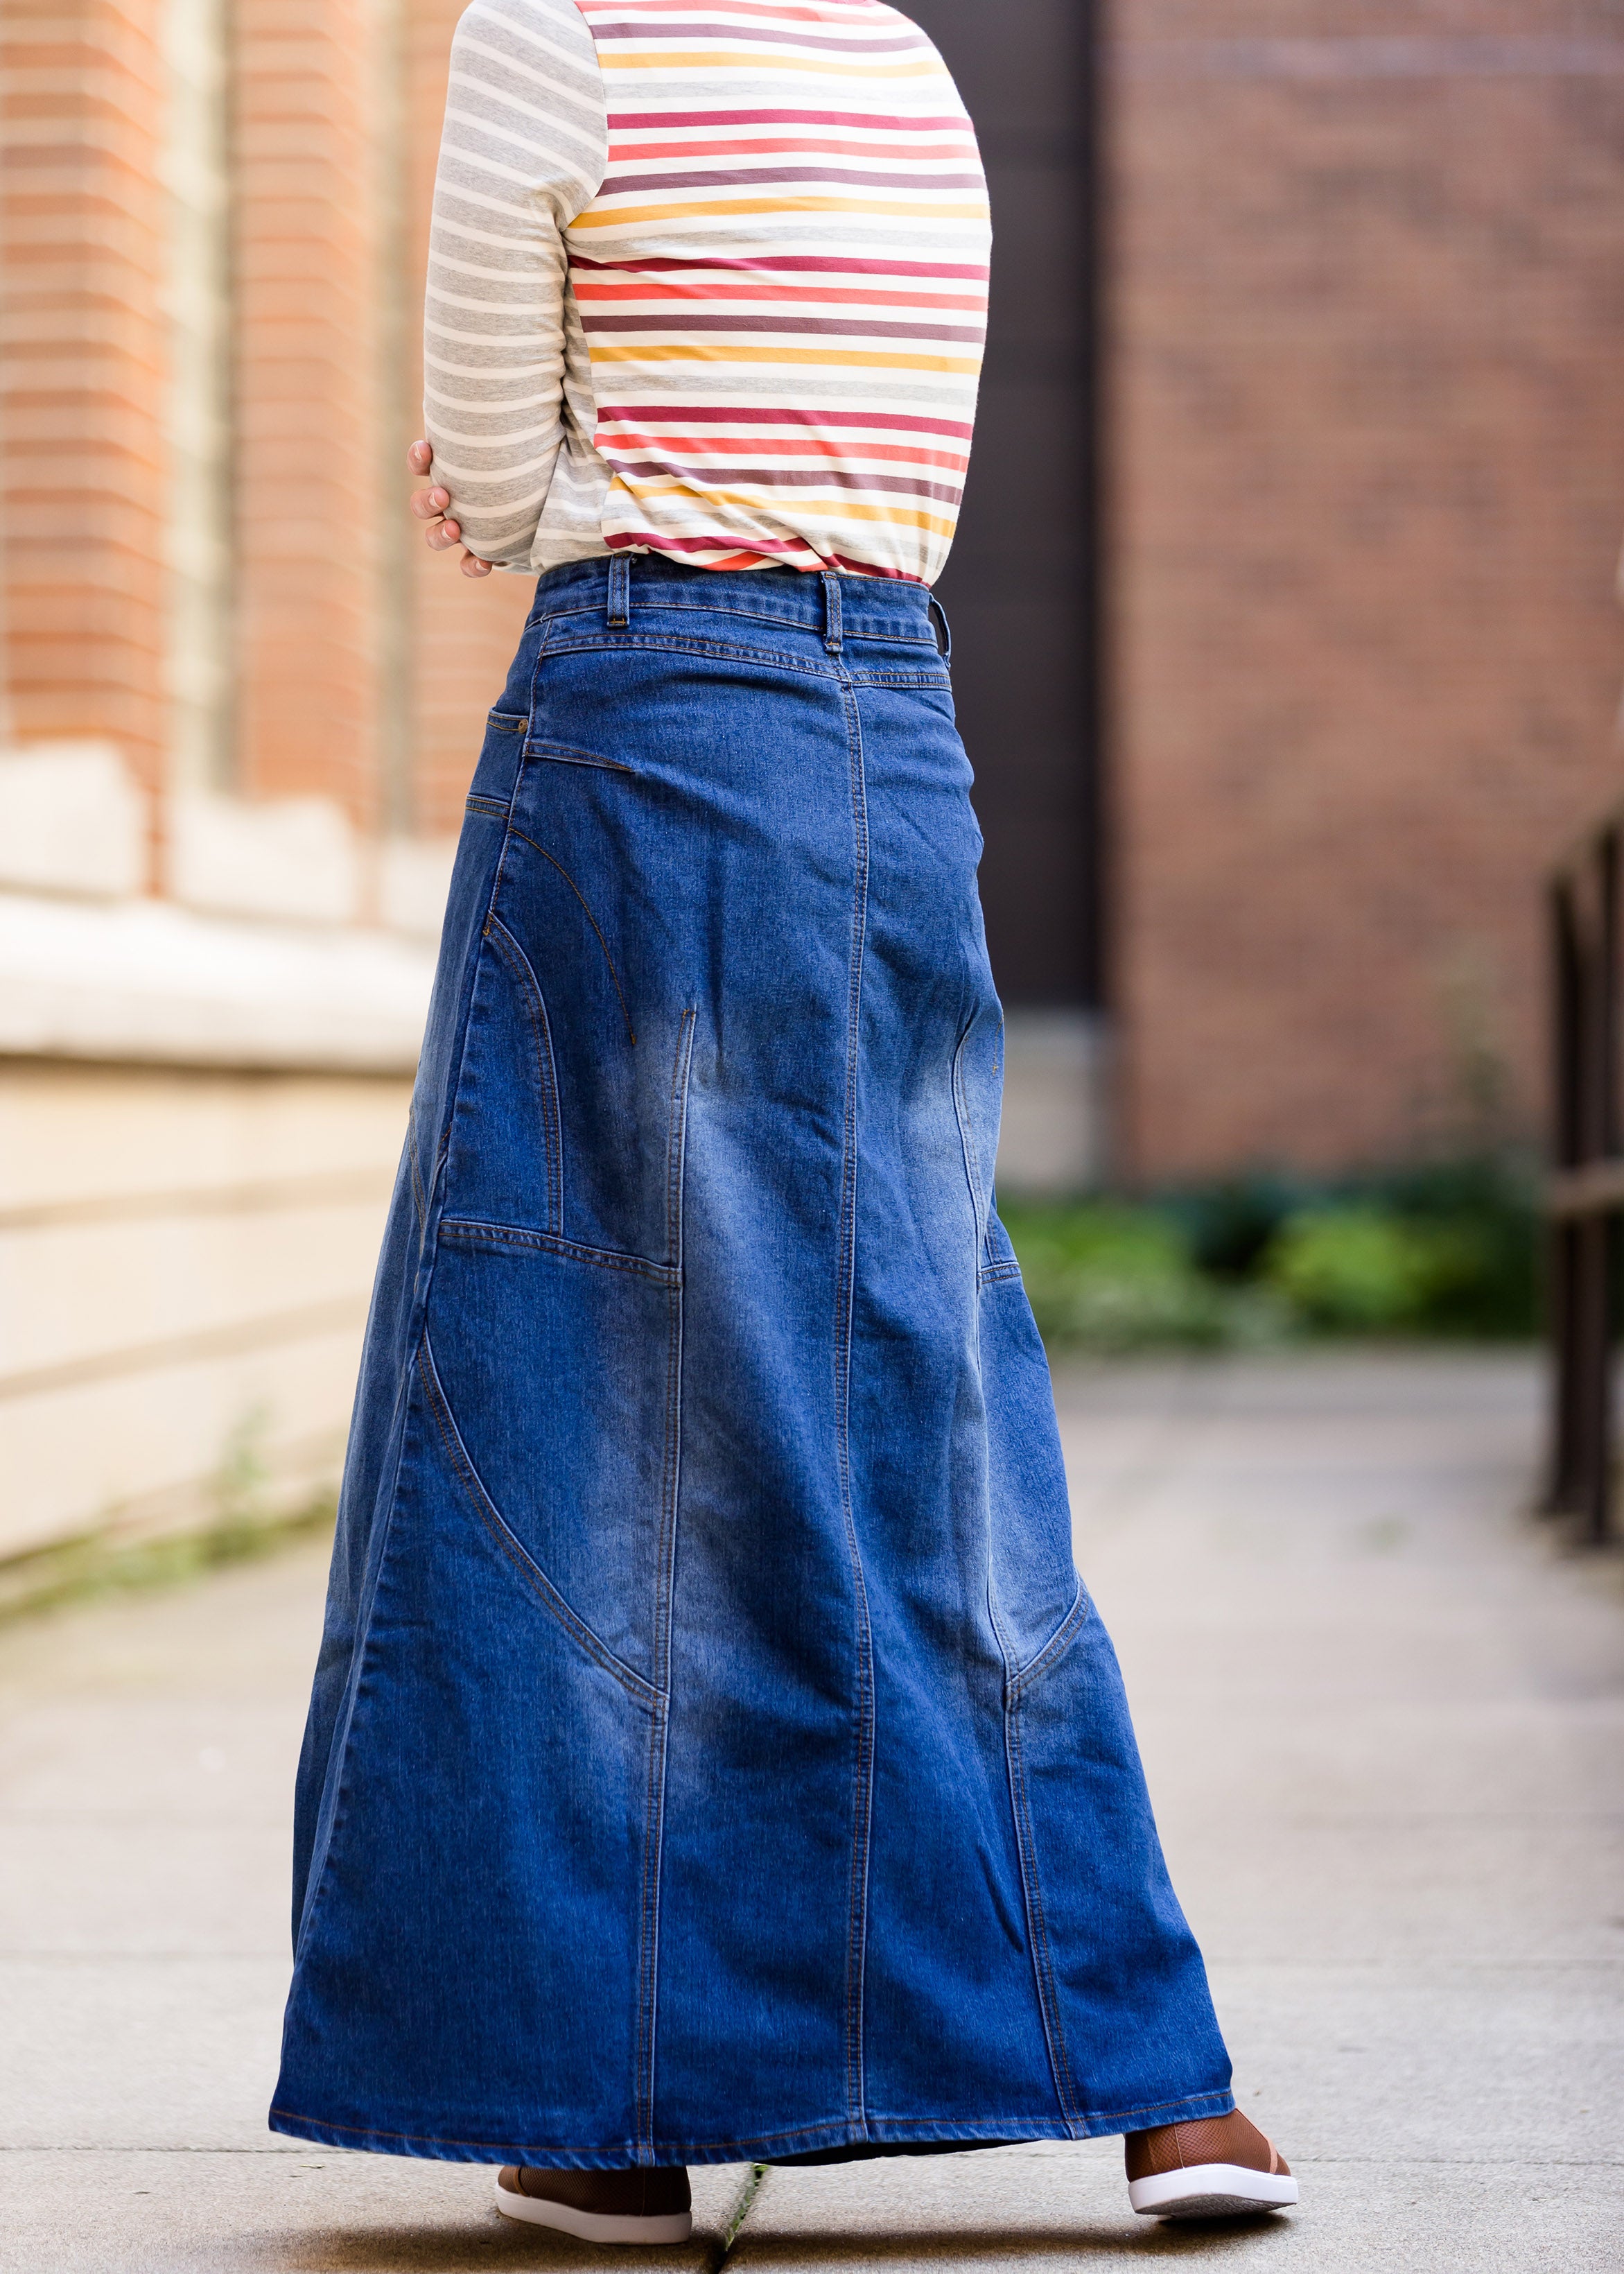 Women's Denim Pencil Jean Skirt Casual Jeans Mini Skirt Frayed Hem Skirt  Club | eBay